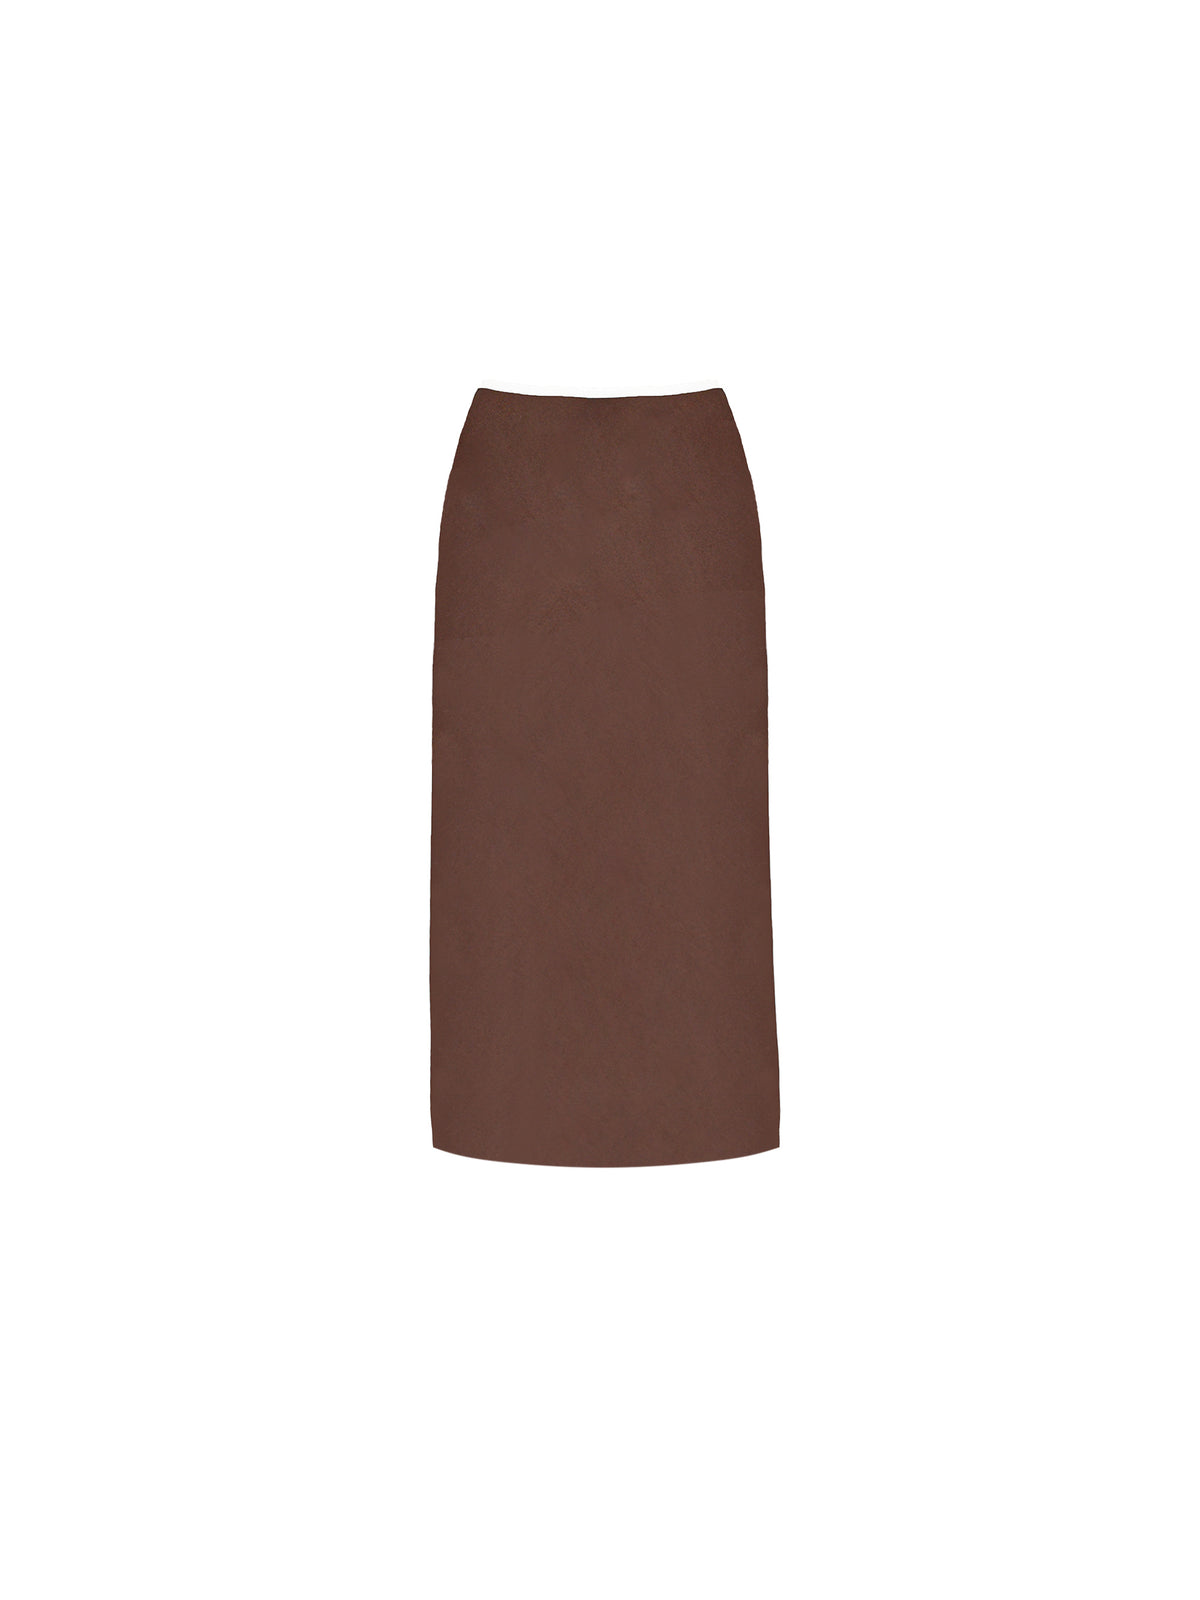 Petite Brown Satin Bias Skirt